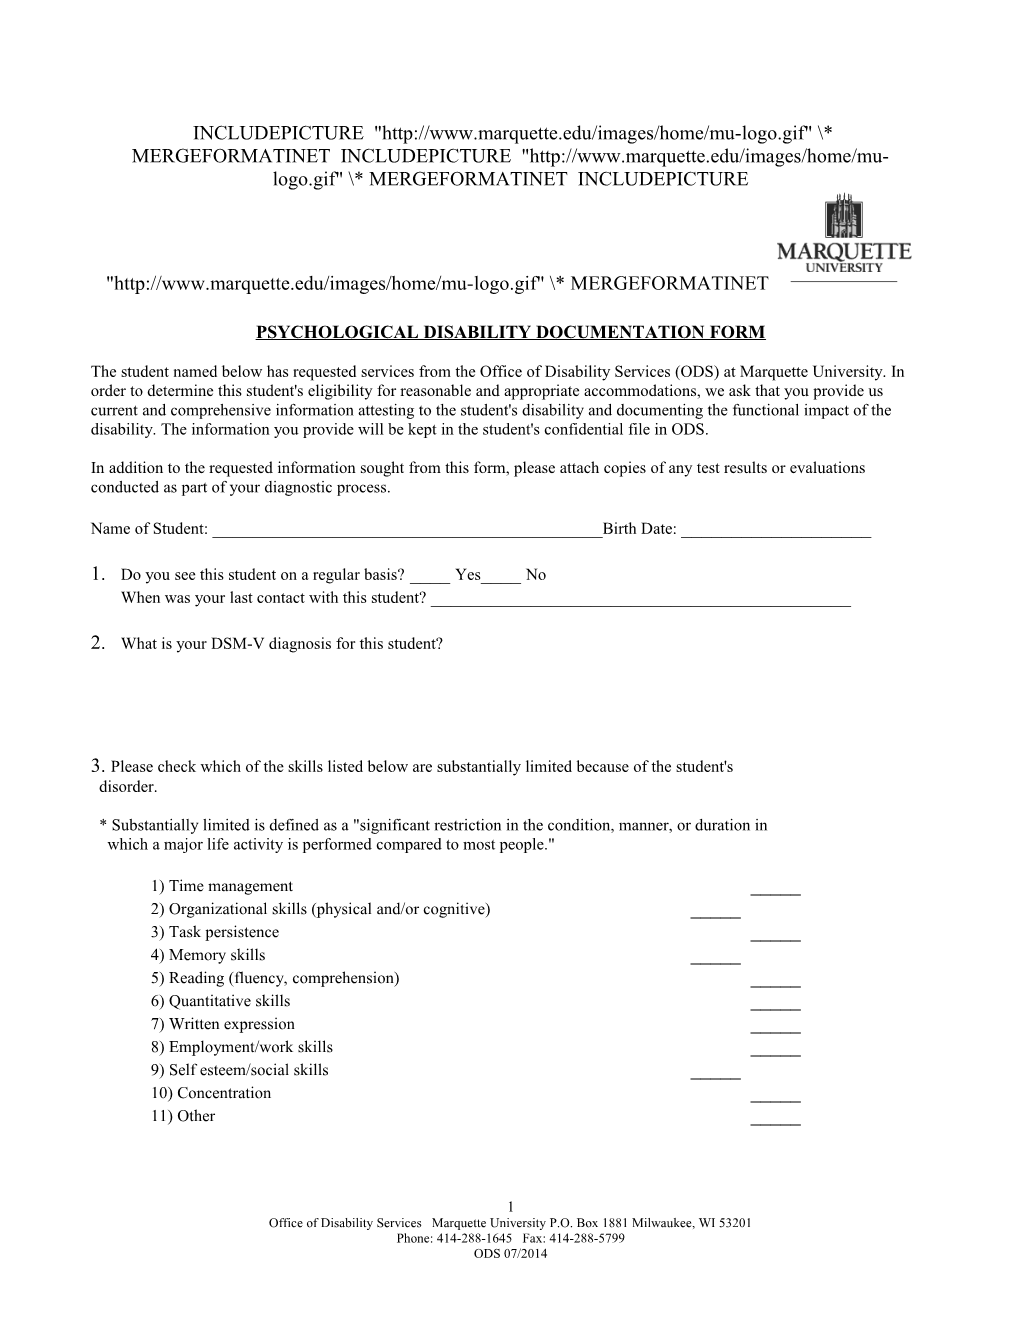 Psychological Disability Documentation Form